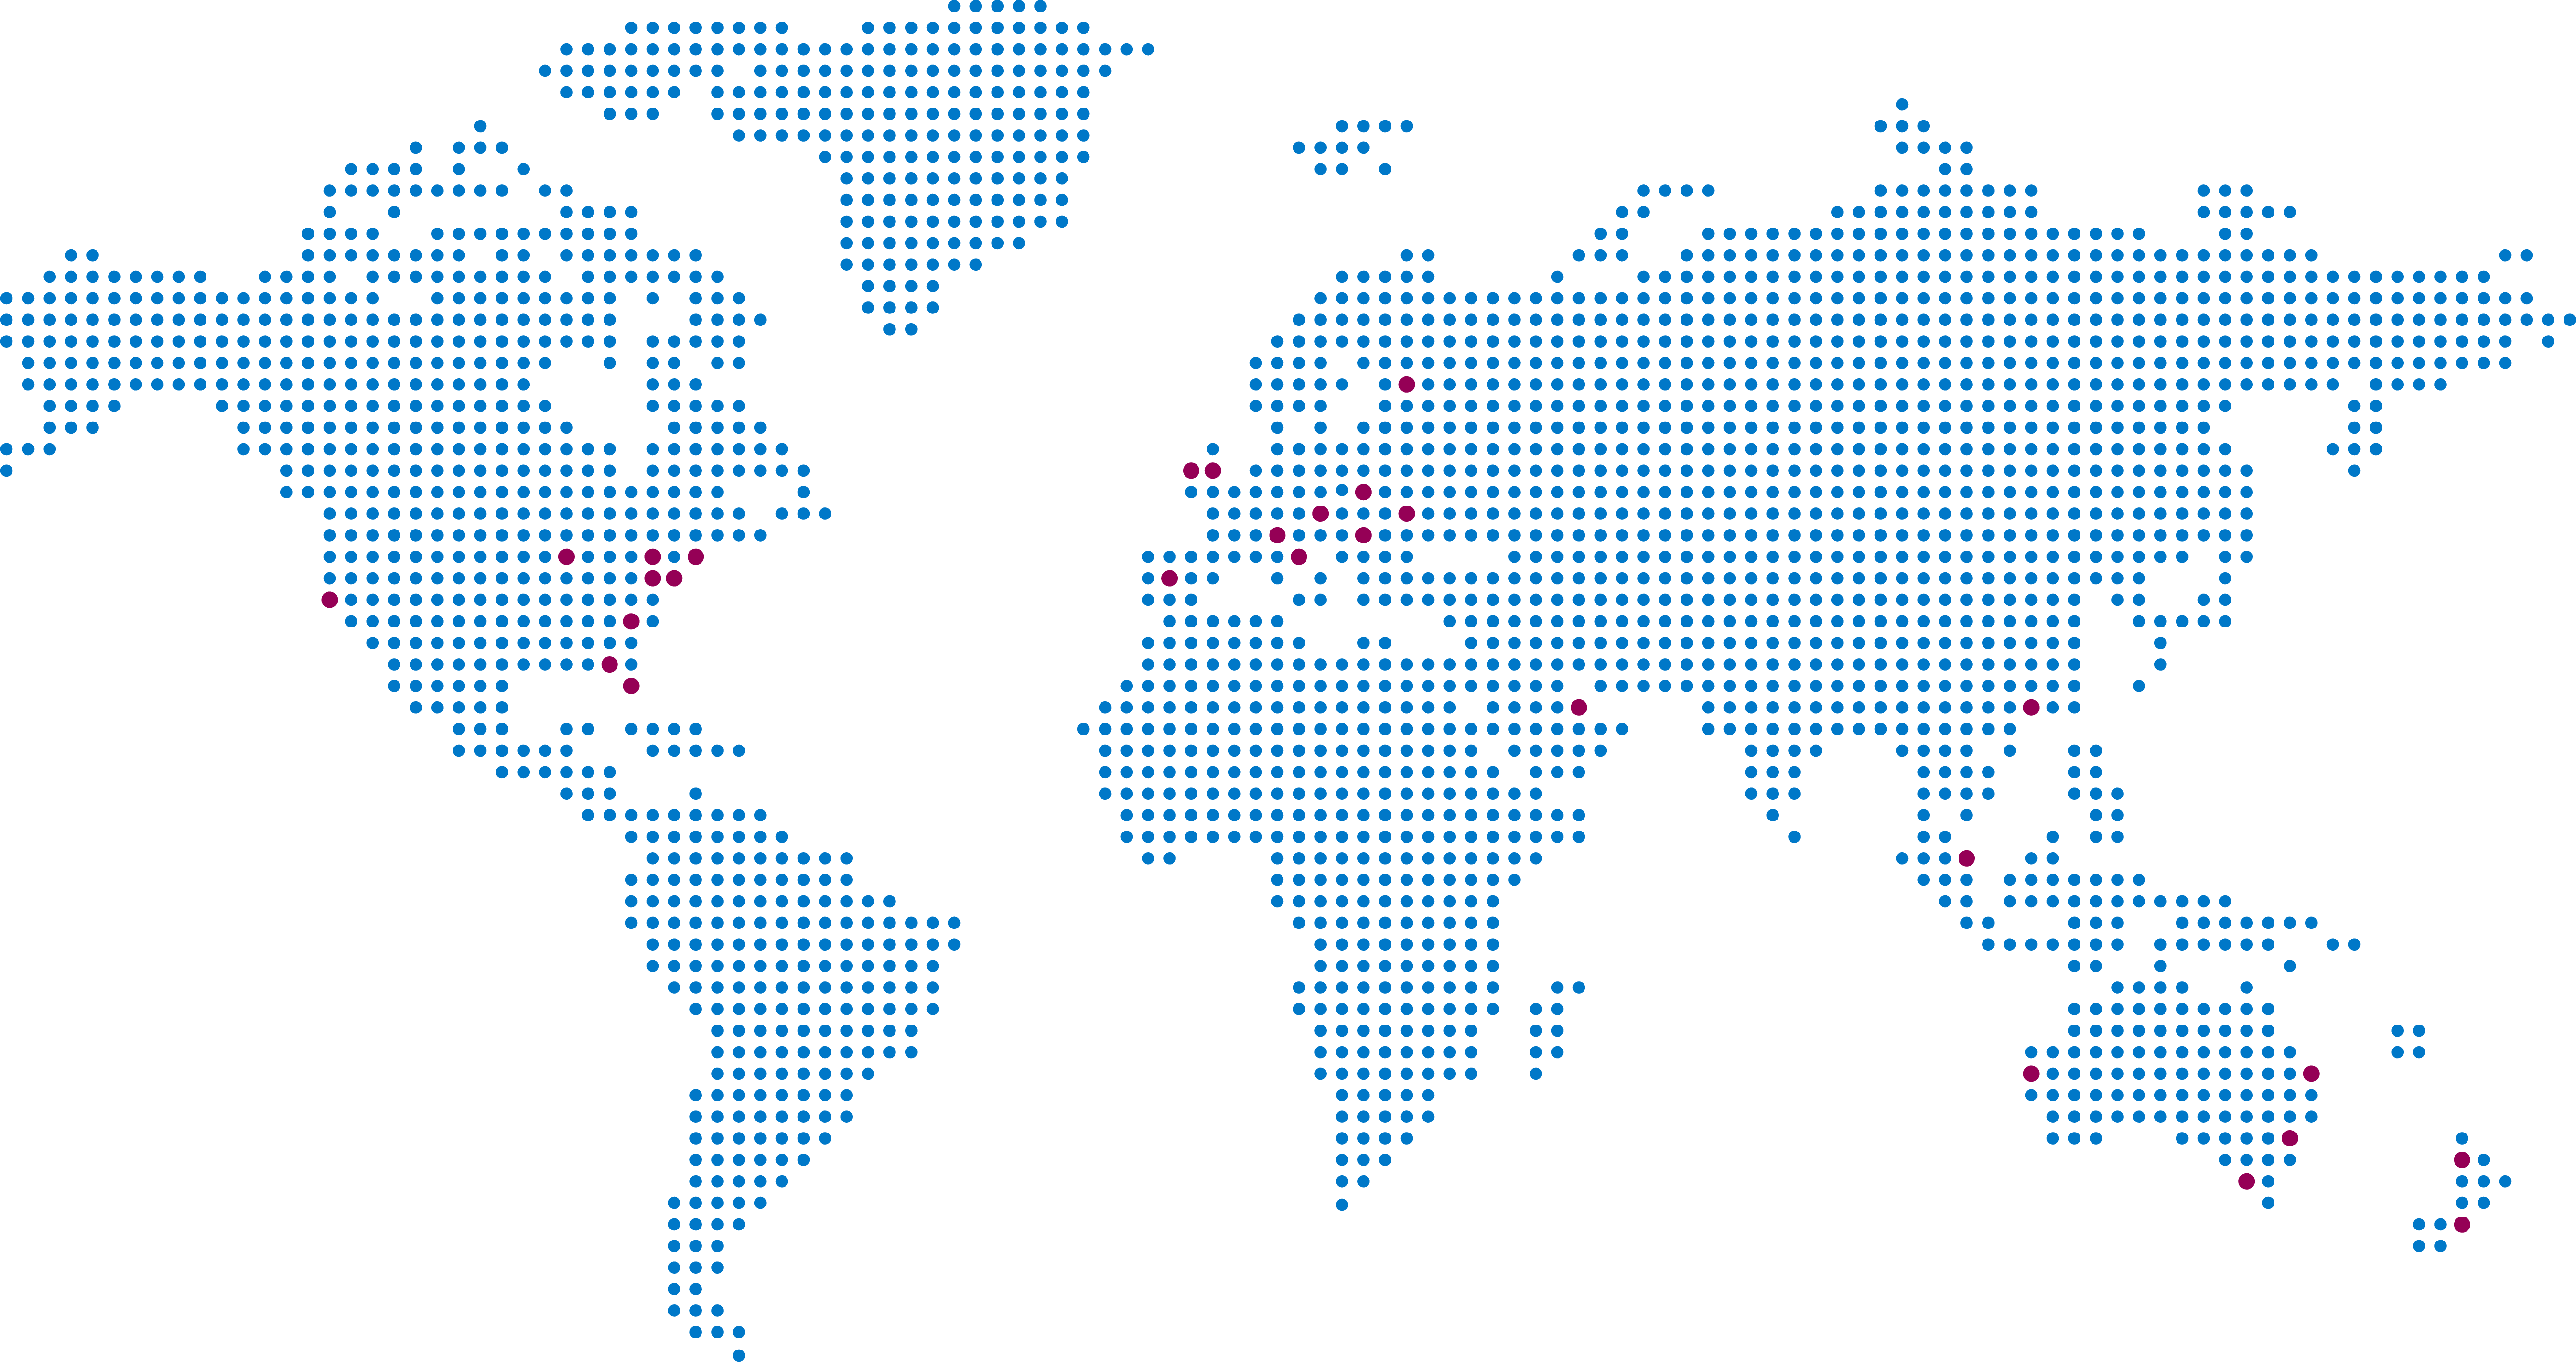 DUAL global network map